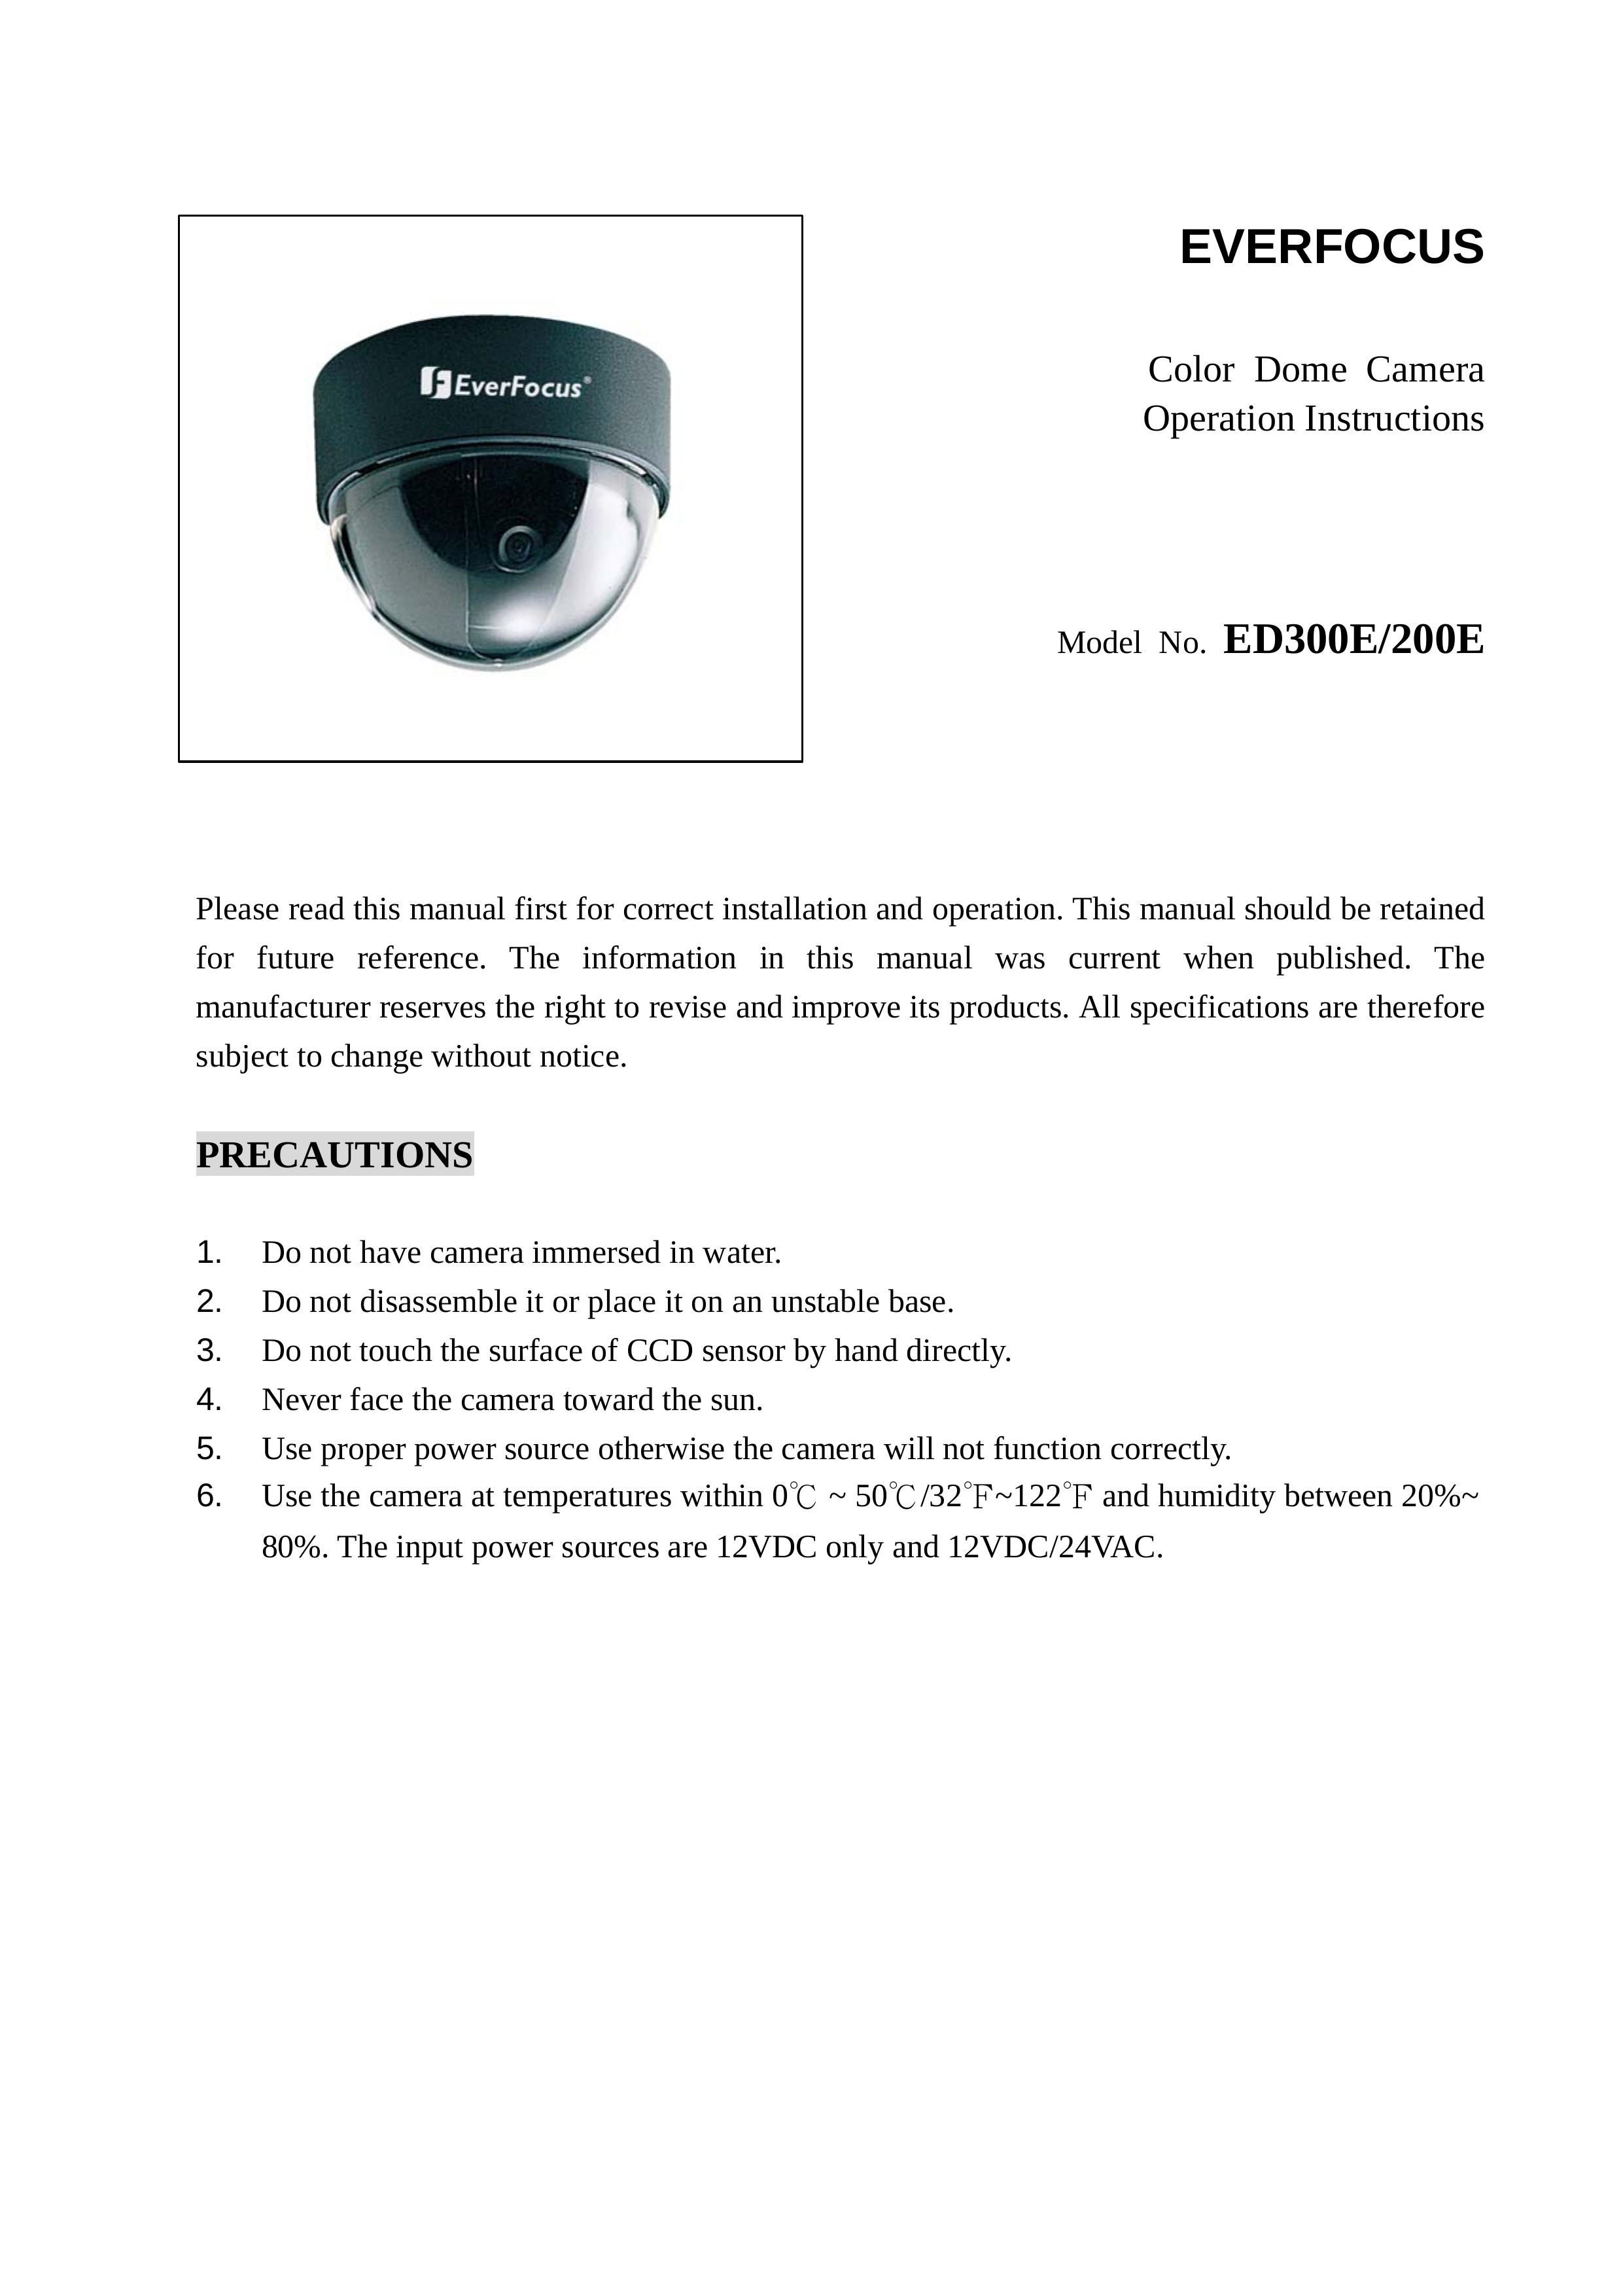 EverFocus ED300E Security Camera User Manual